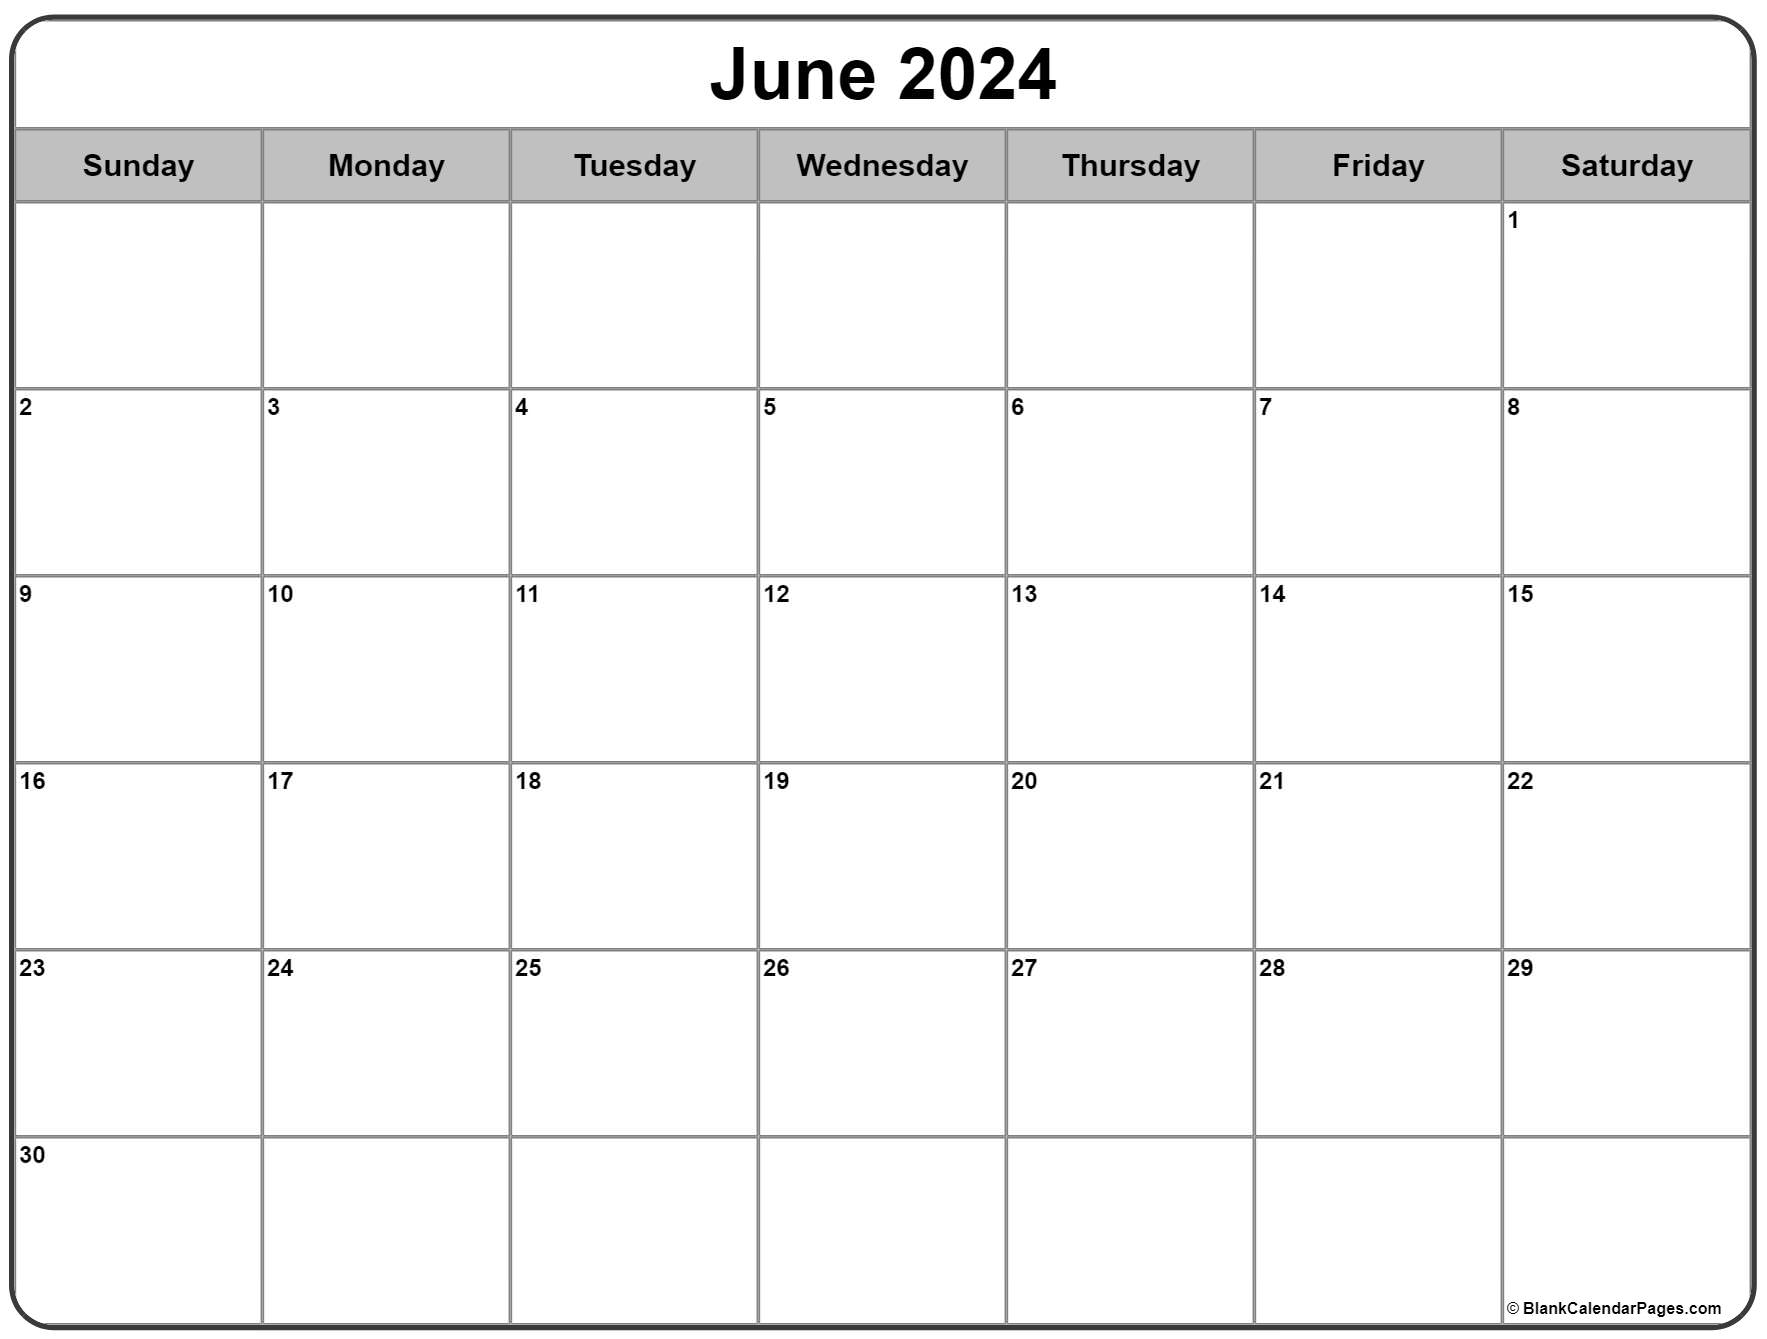 Календарь на 2024 год на телефон. Календарь 2024. Календарь май 2024 года. Календарь 2024 для заметок. Календарь 2024 / Calendar 2024.